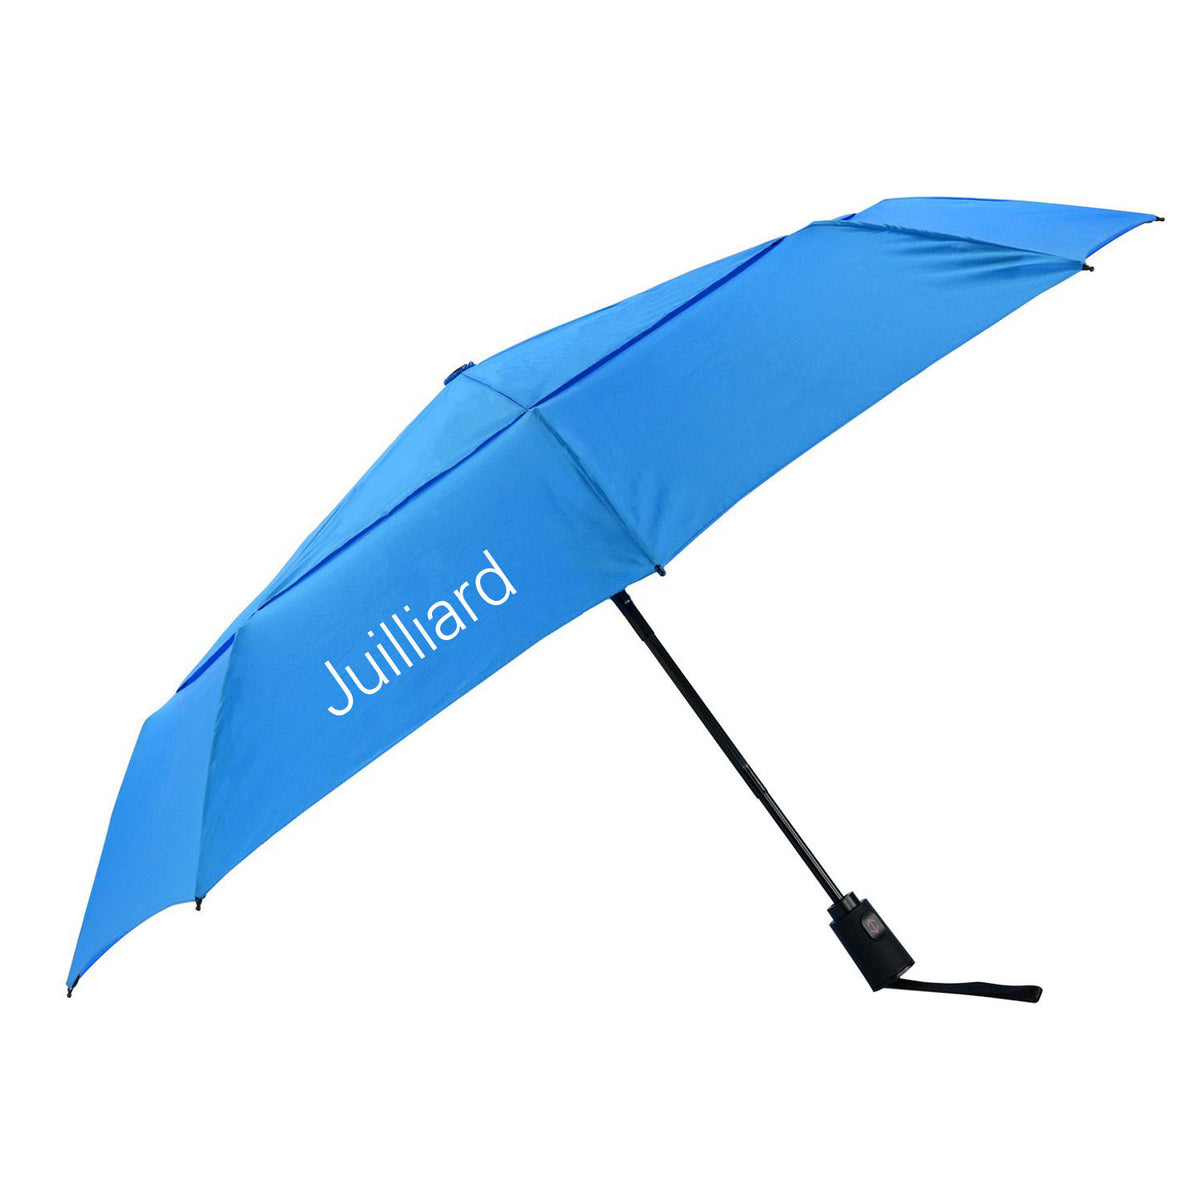 Umbrella: Printed with Juilliard logo (10" folded)